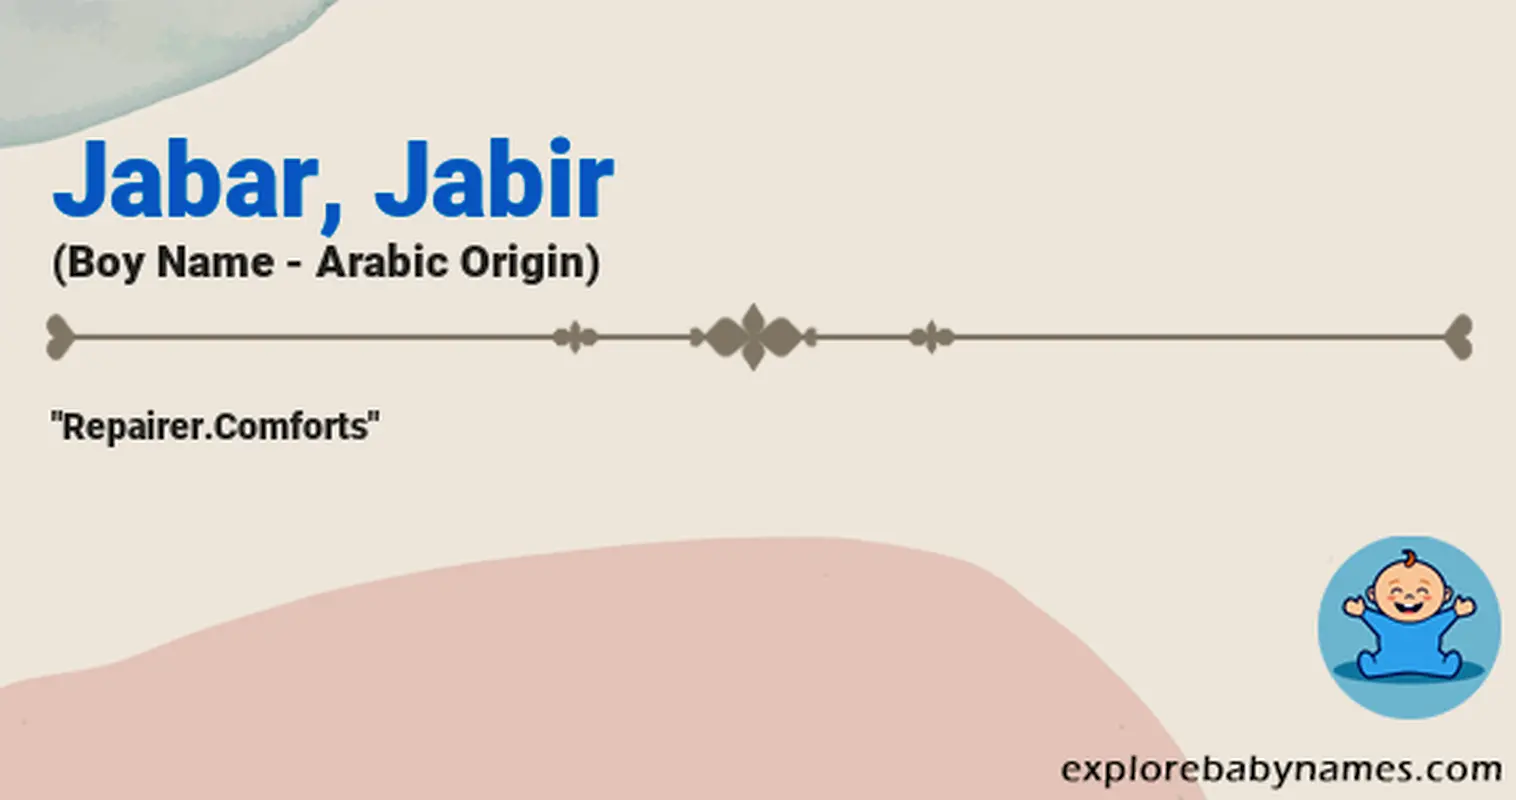 Meaning of Jabar, Jabir